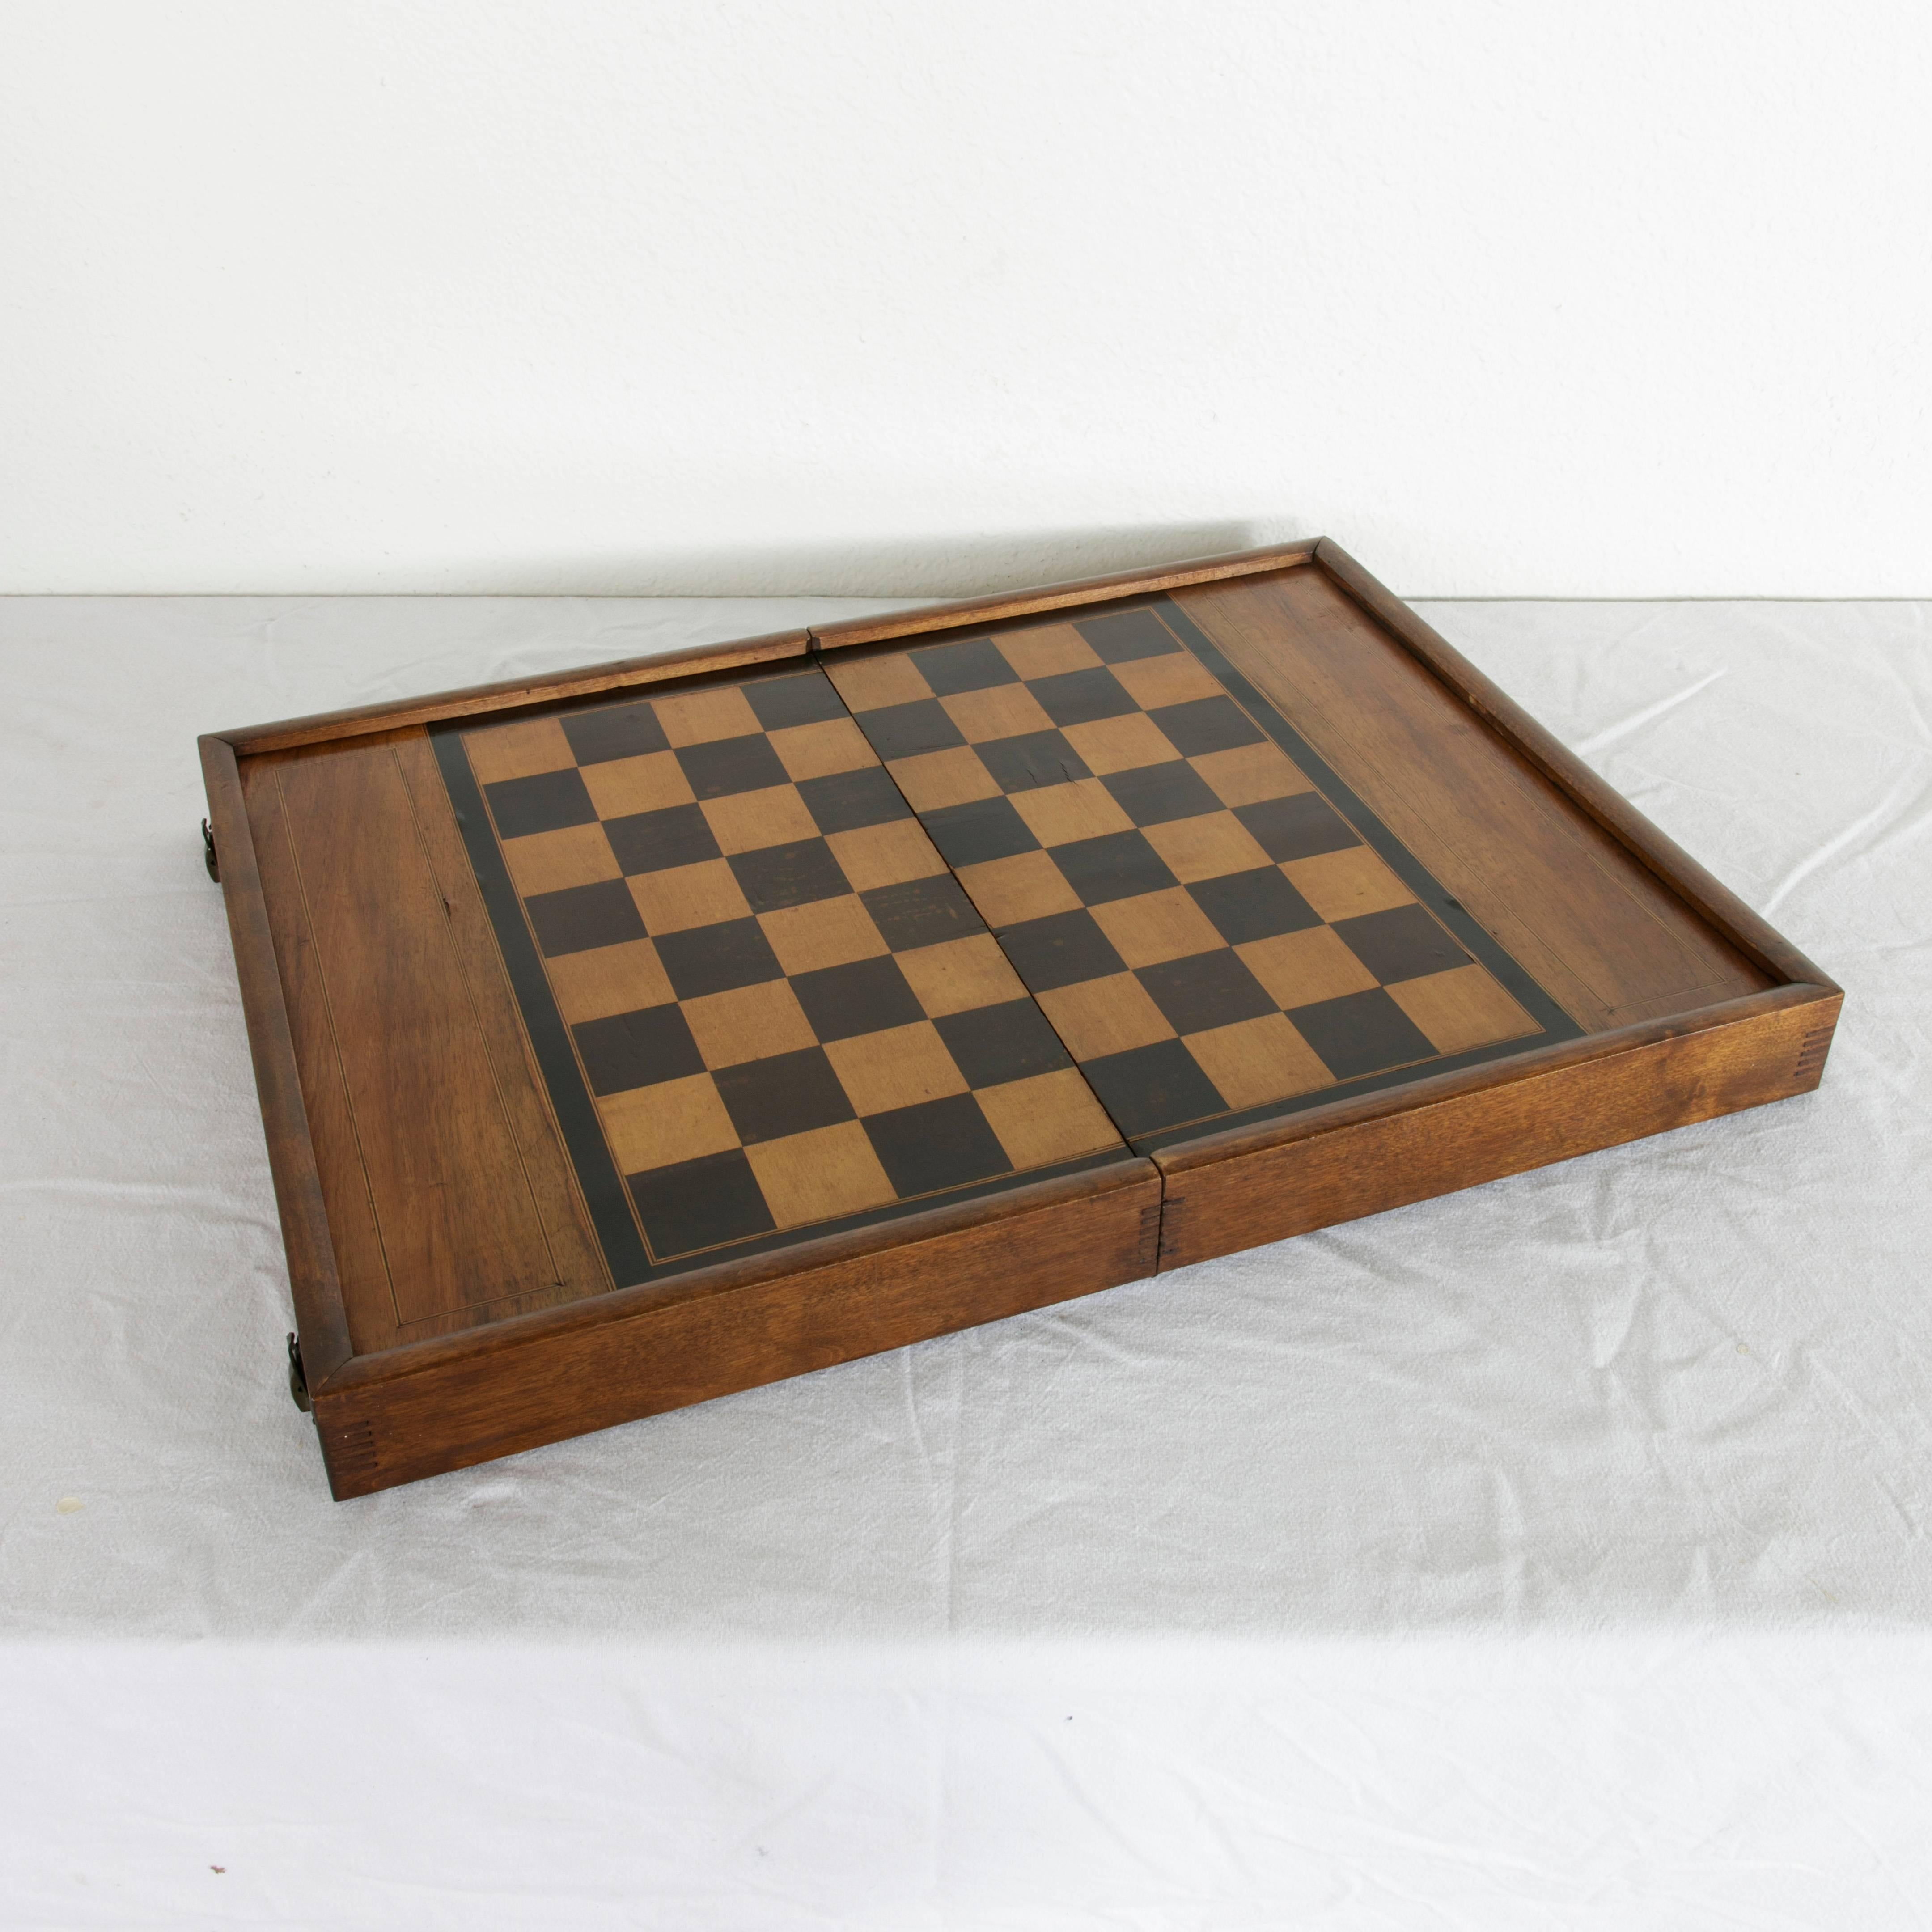 Artisan-Made Parquetry Game Box or Board, Chess Checkers Backgammon, circa 1900 1